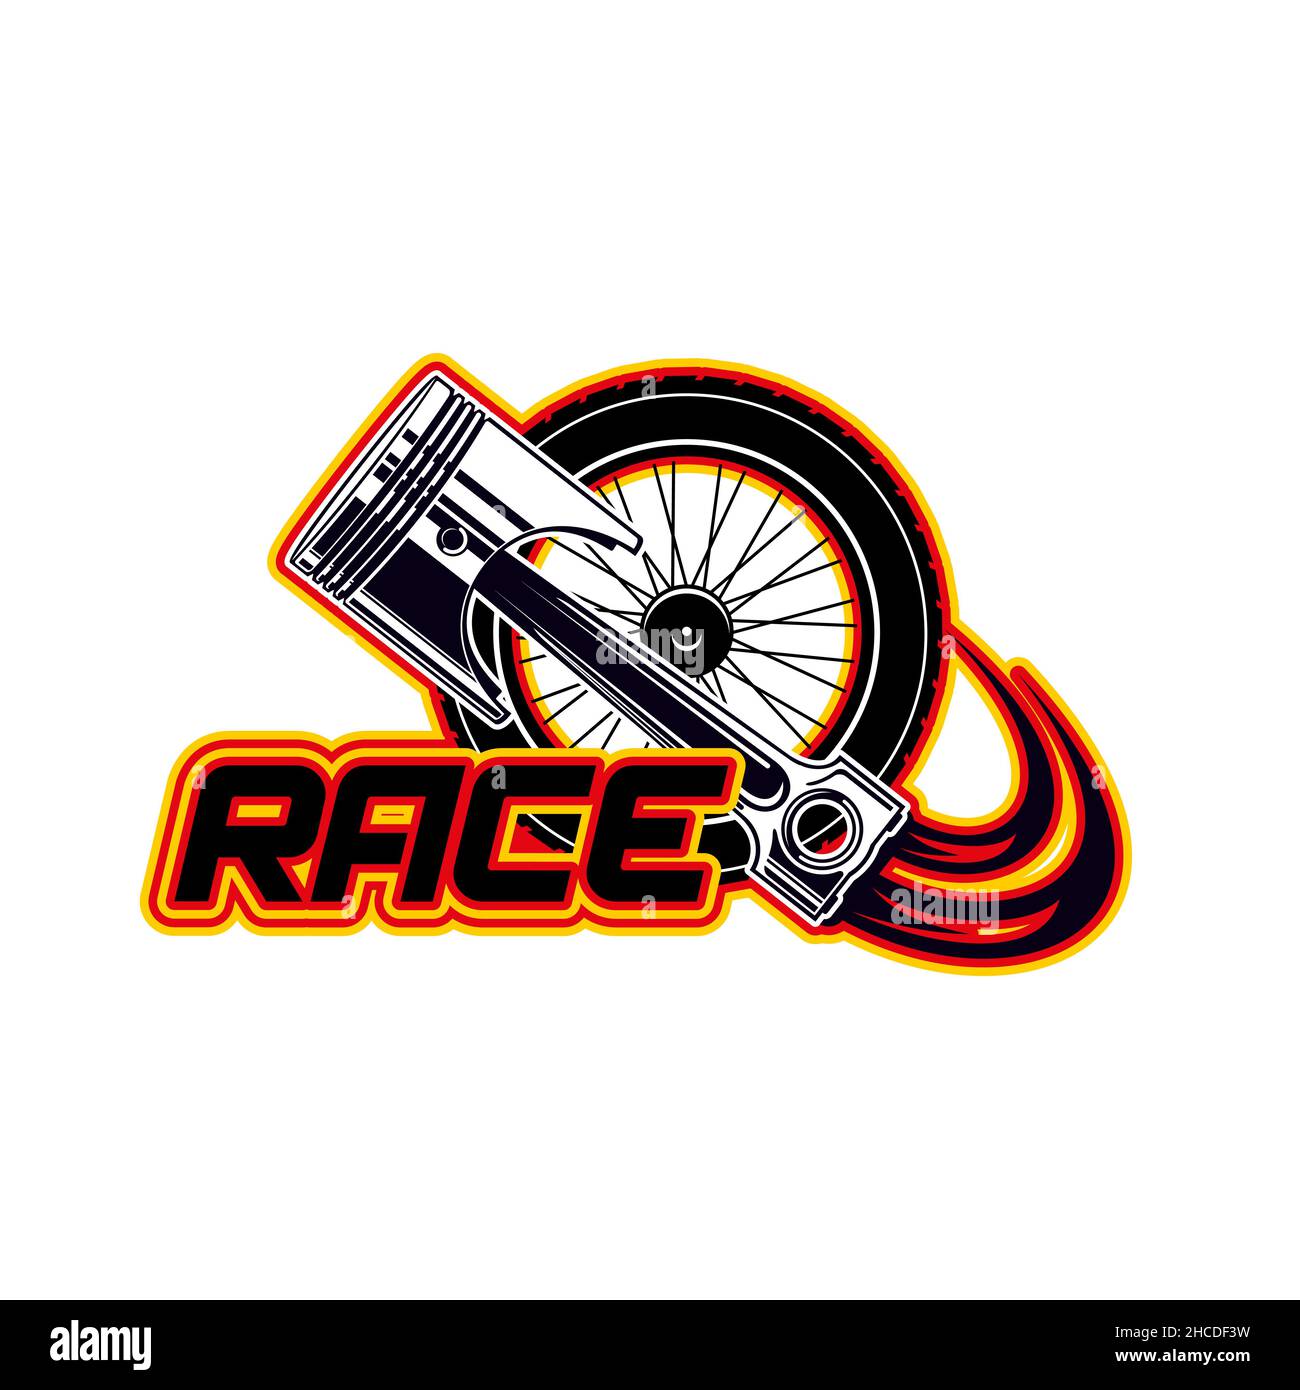 Racing Logo Design Services Online - Custom Logo Design For Racing